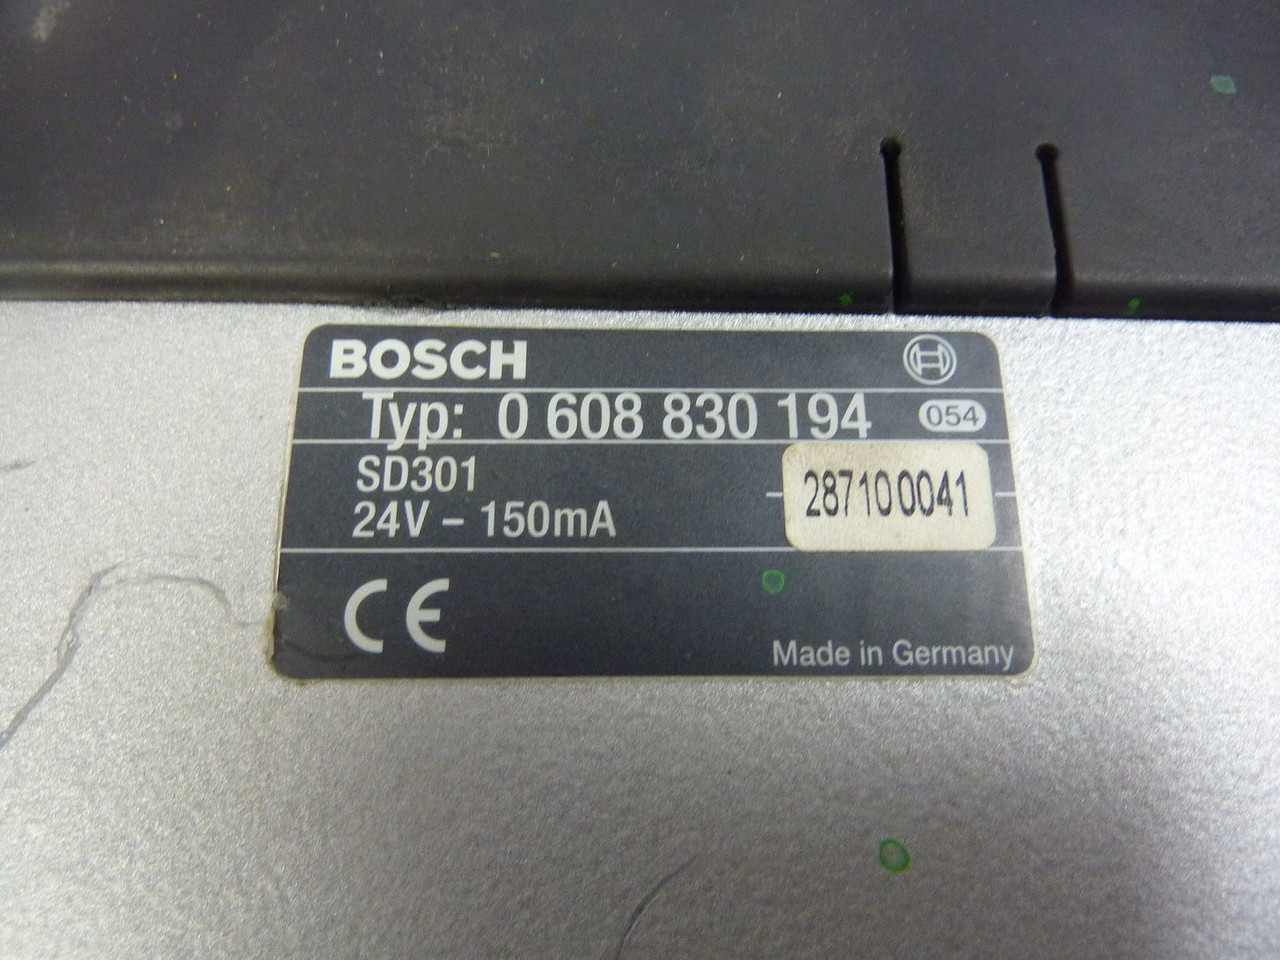 Bosch 0608830194 Operator Interface Panel 24VDC USED